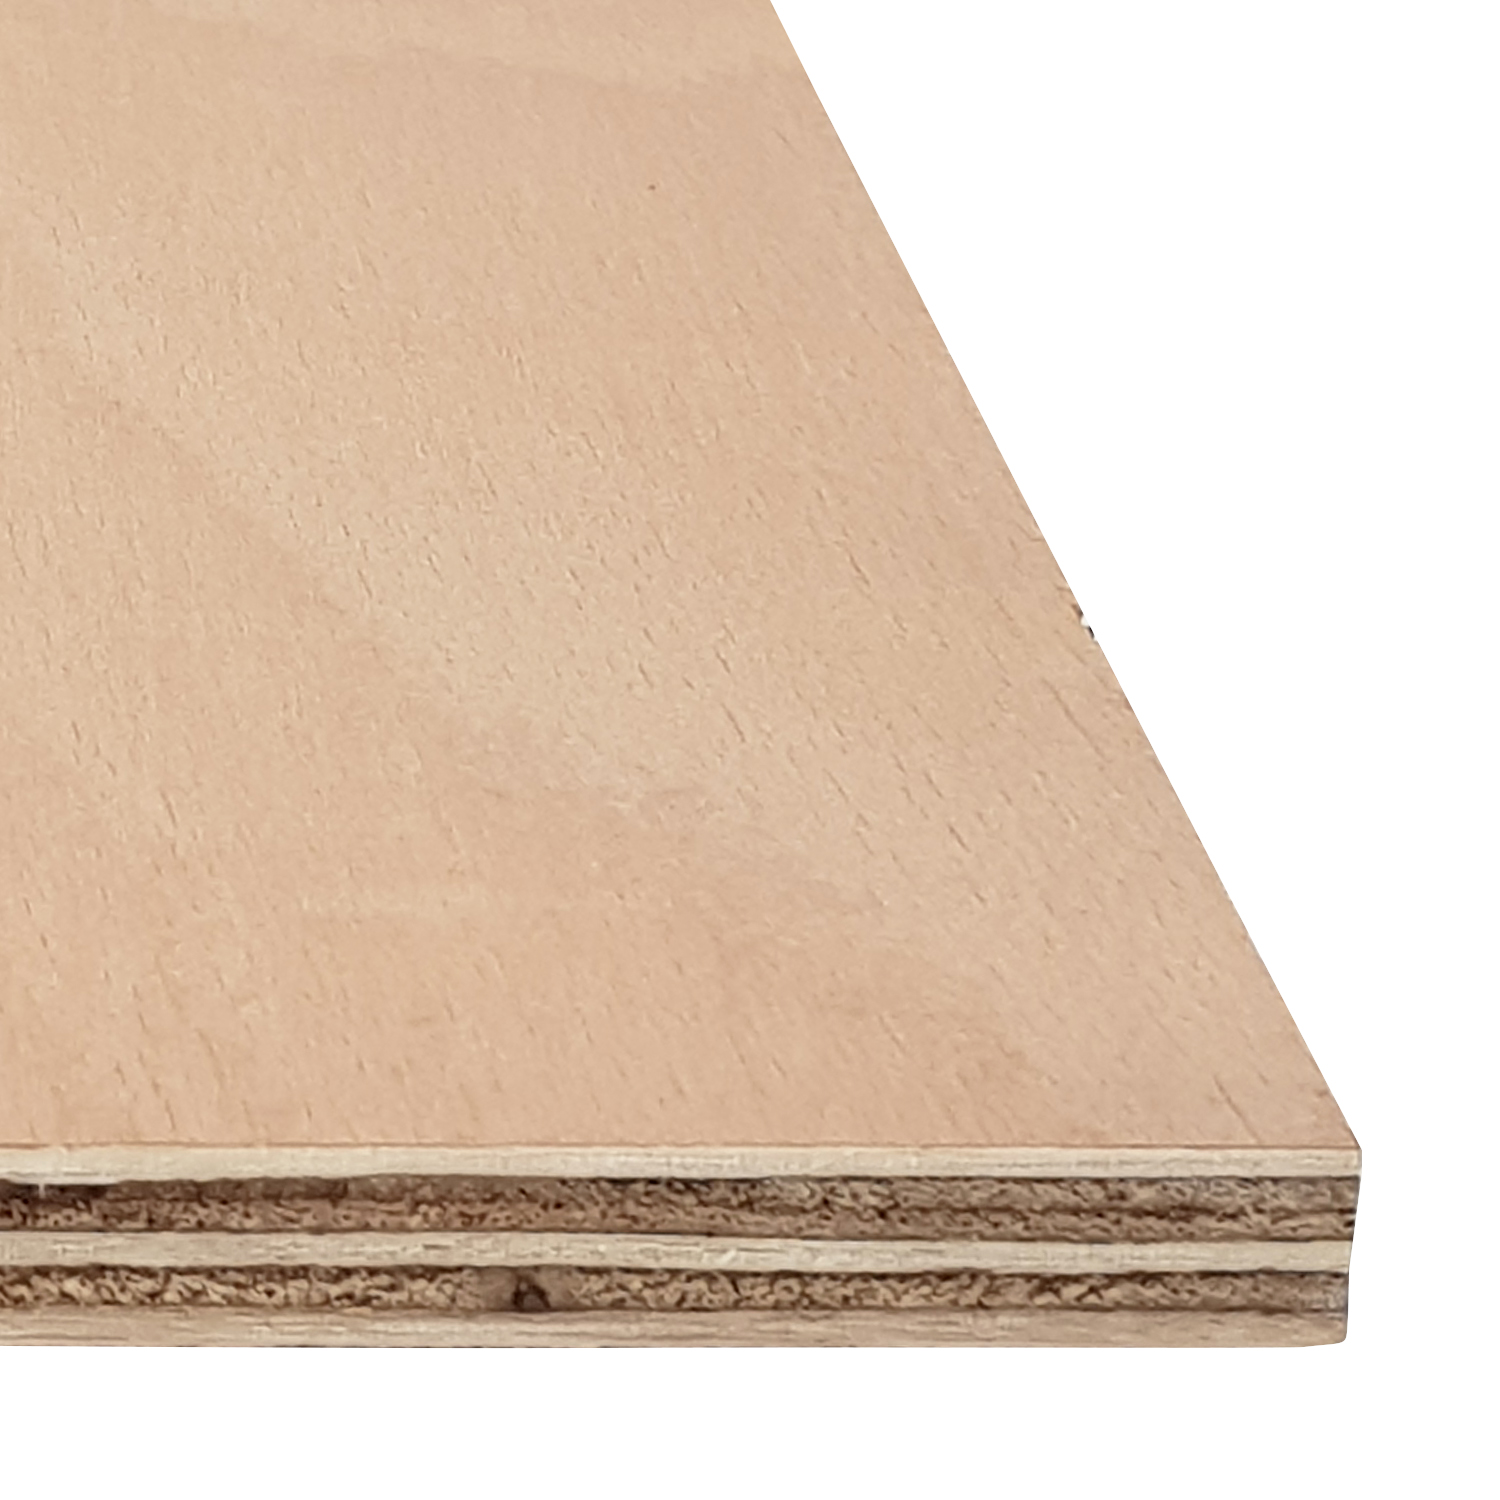 Plywood - Hardwood